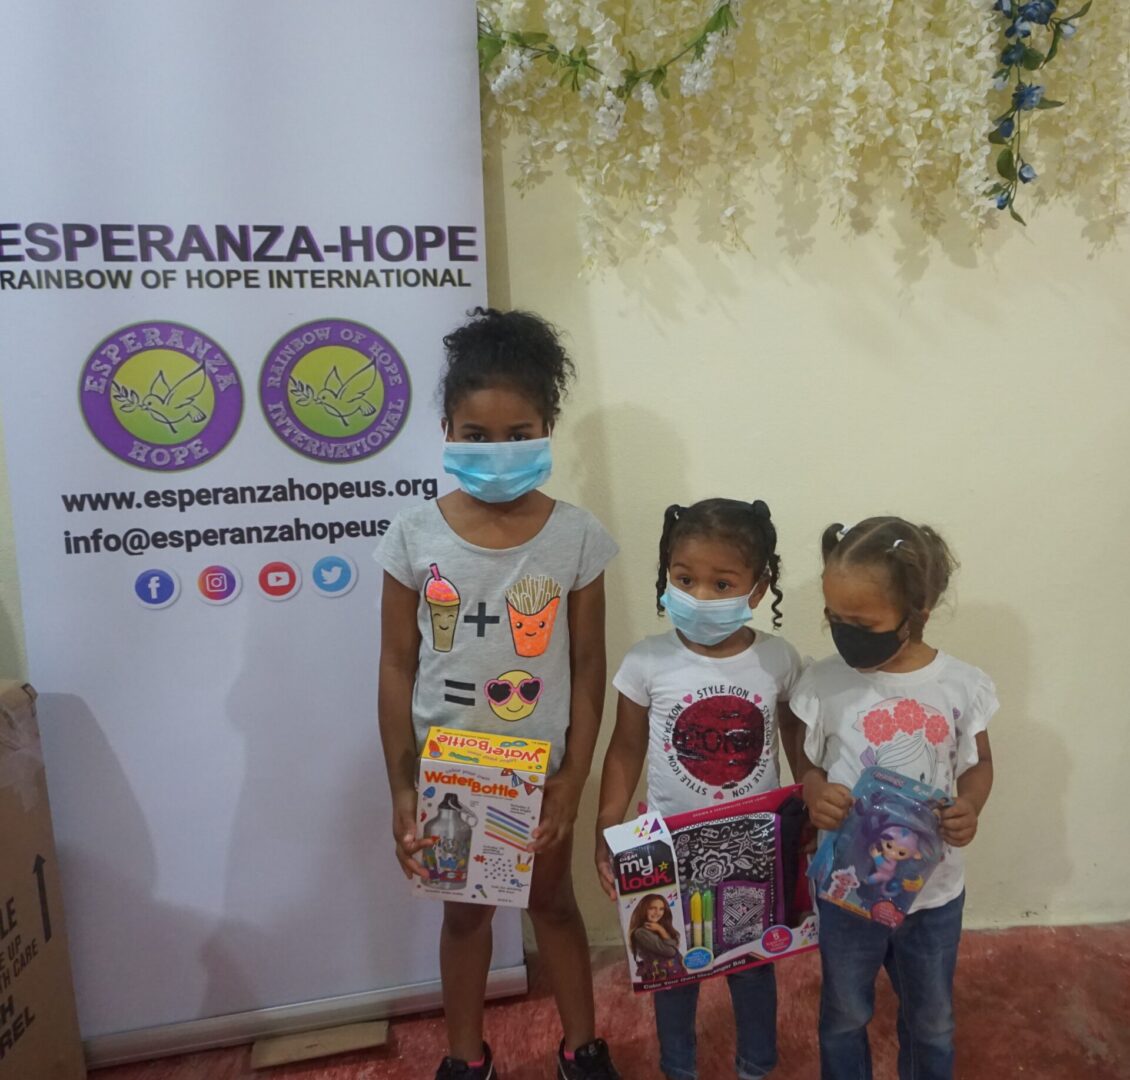 Three young girls holding toys beside the Esperanza-Hope tarpaulin